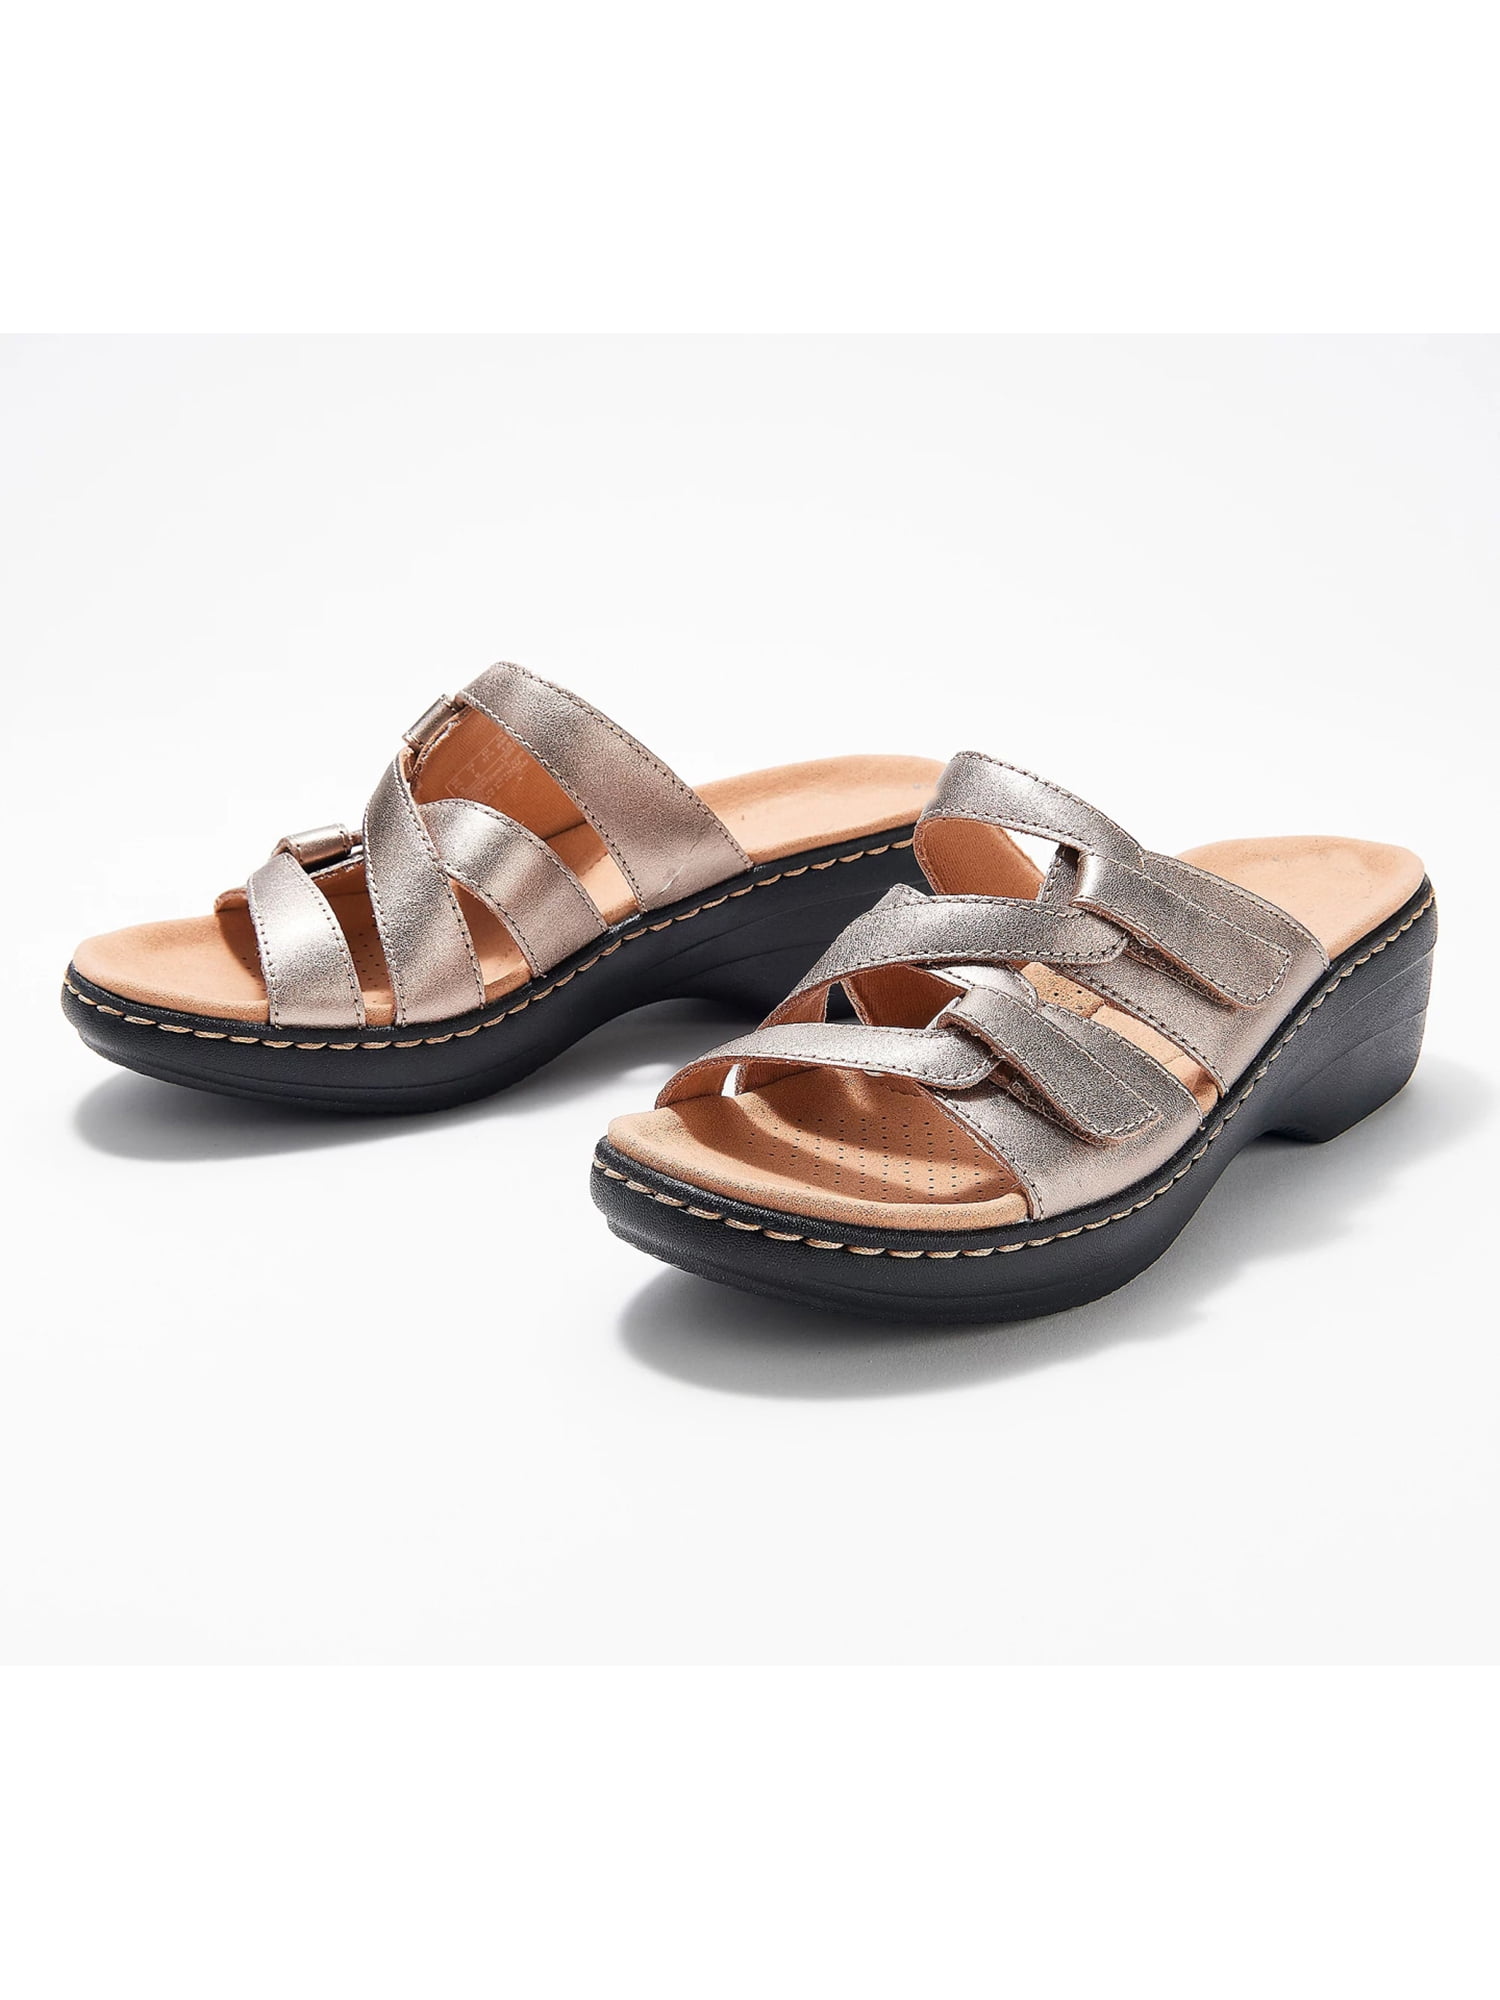 Glookwis Girls Sandals Open Toe Slides Wedge Sole Slippers Women's Cozy Comfortable Backless Gray 5.5 - Walmart.com